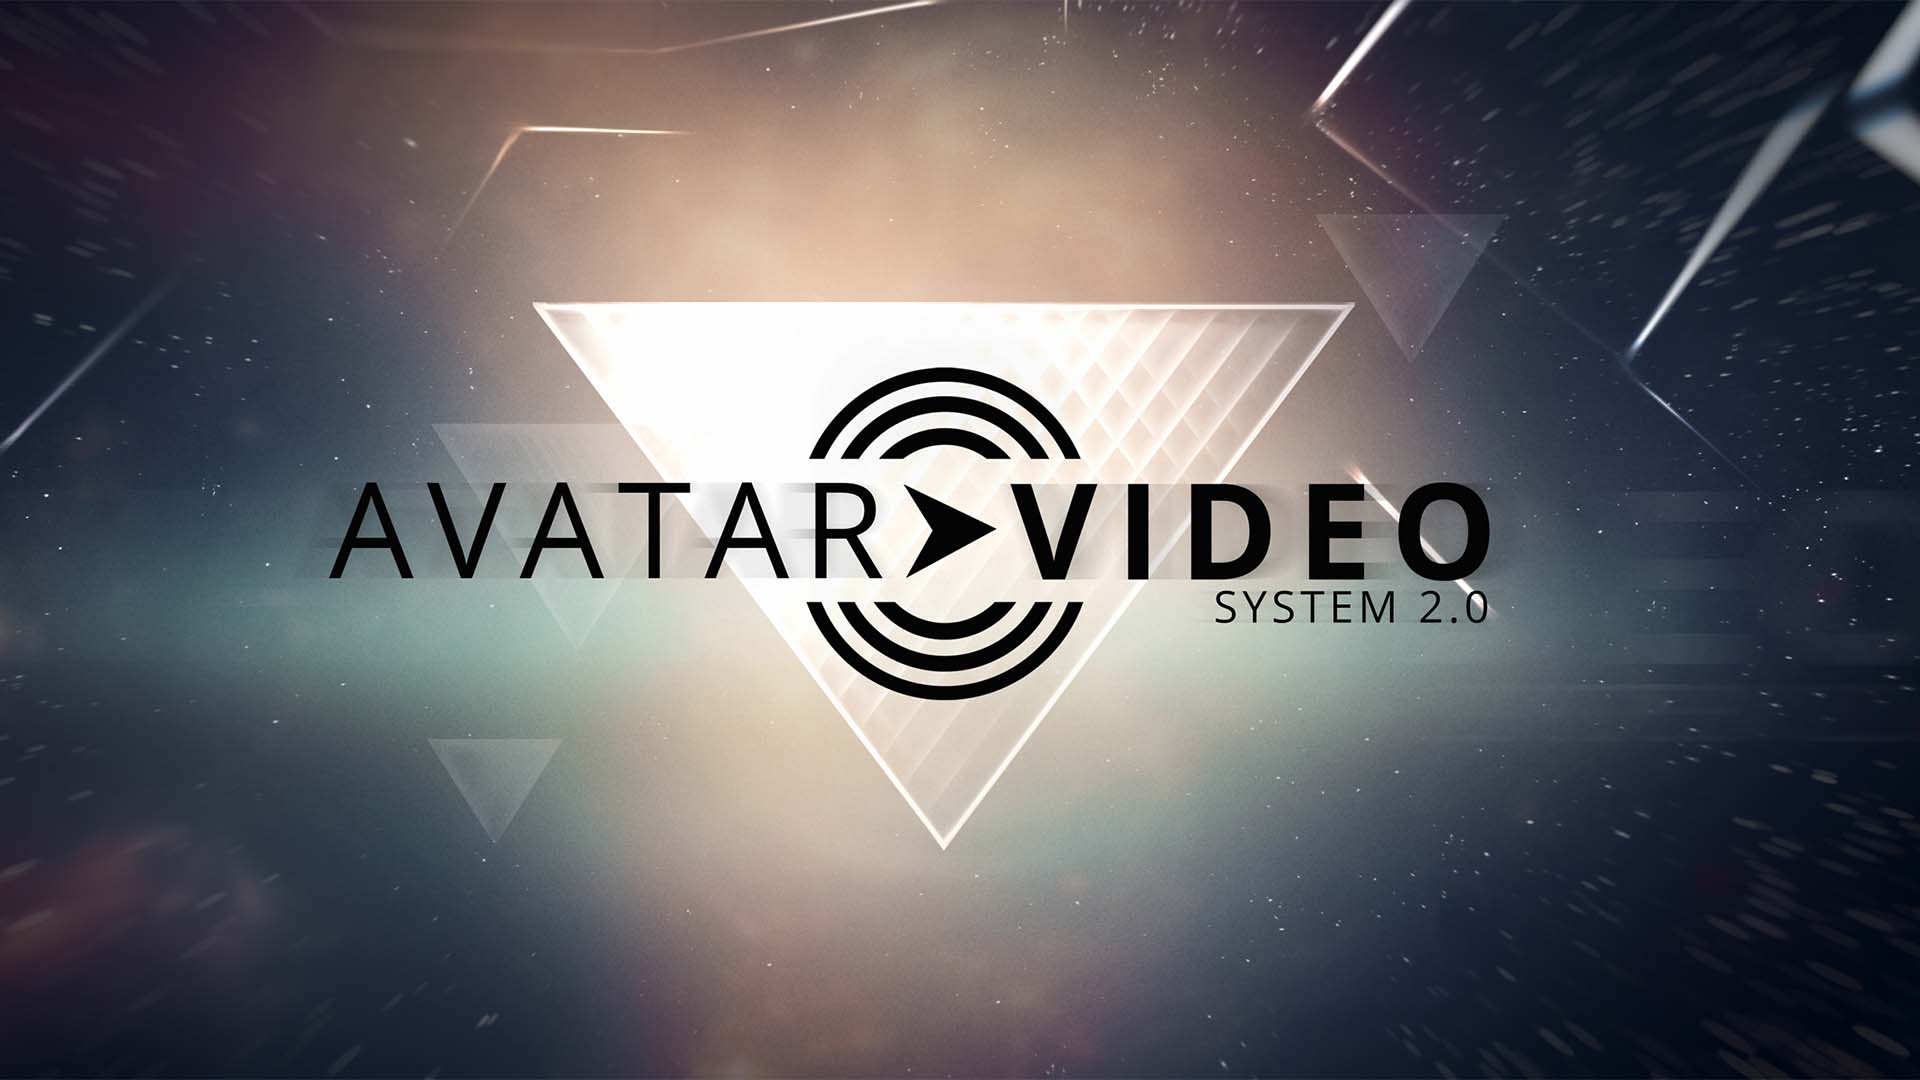 Avatar Video System